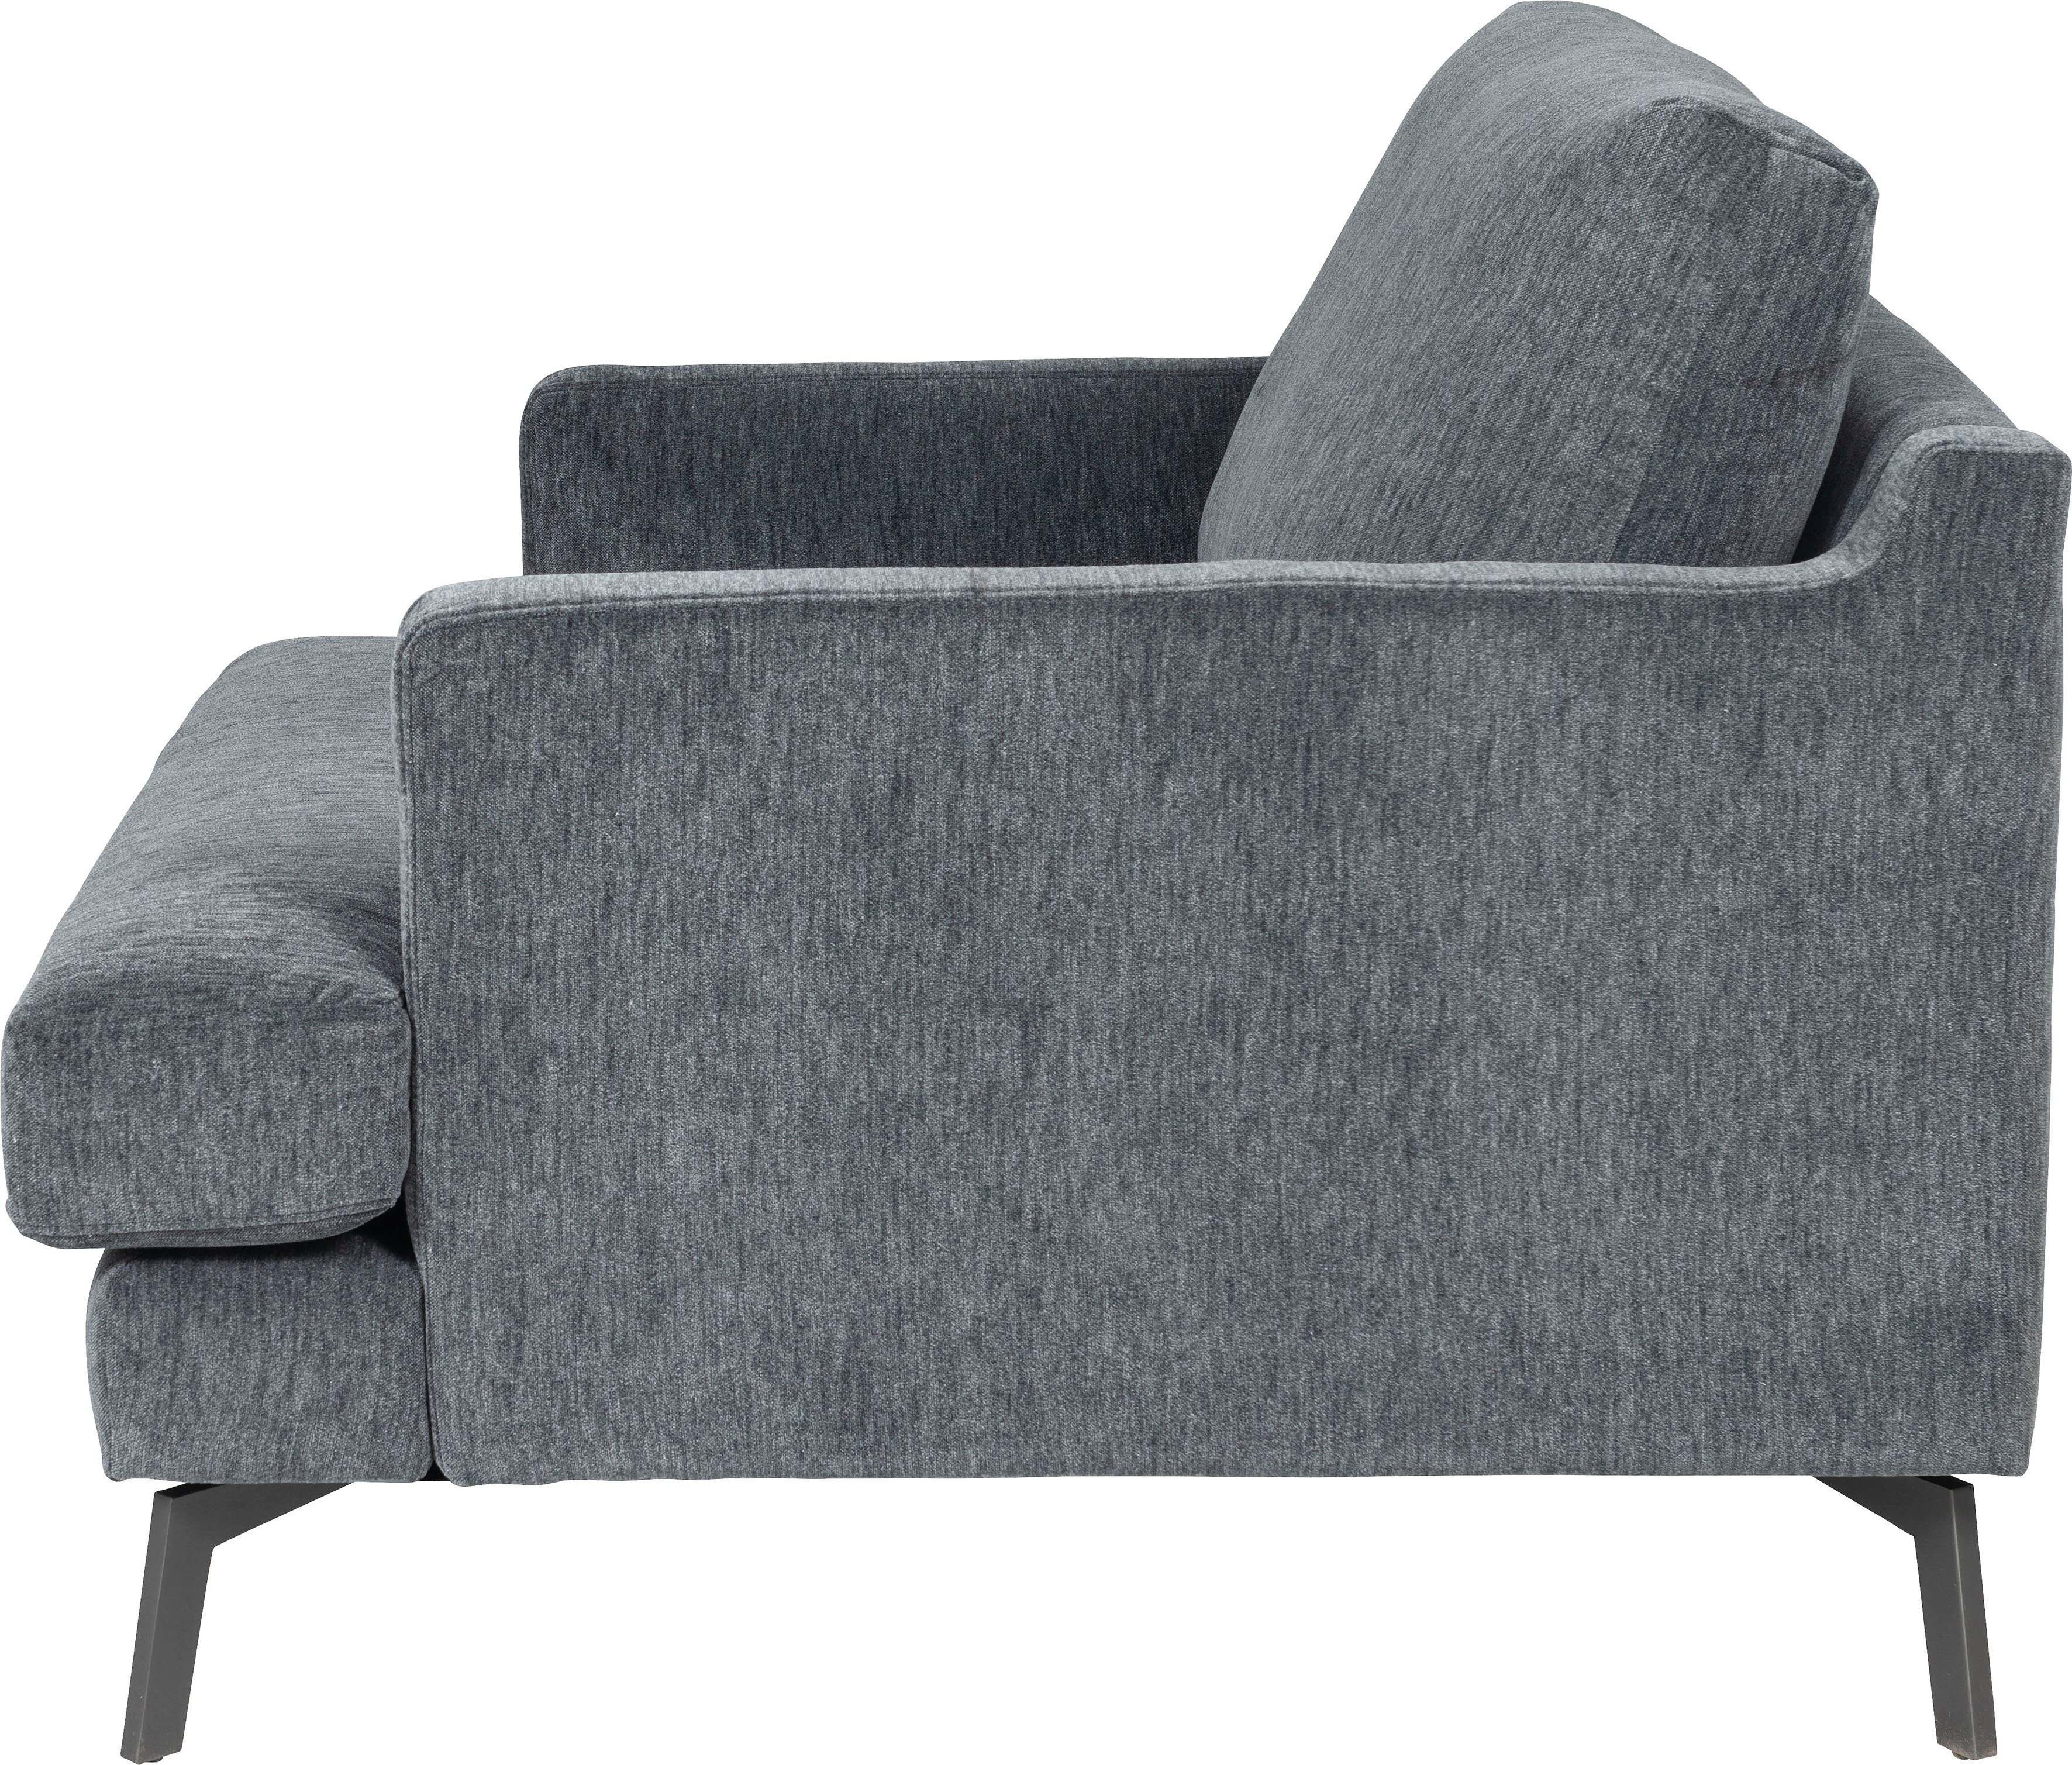 Loungesessel grey Saga, furninova Klassiker Design im skandinavischen ein